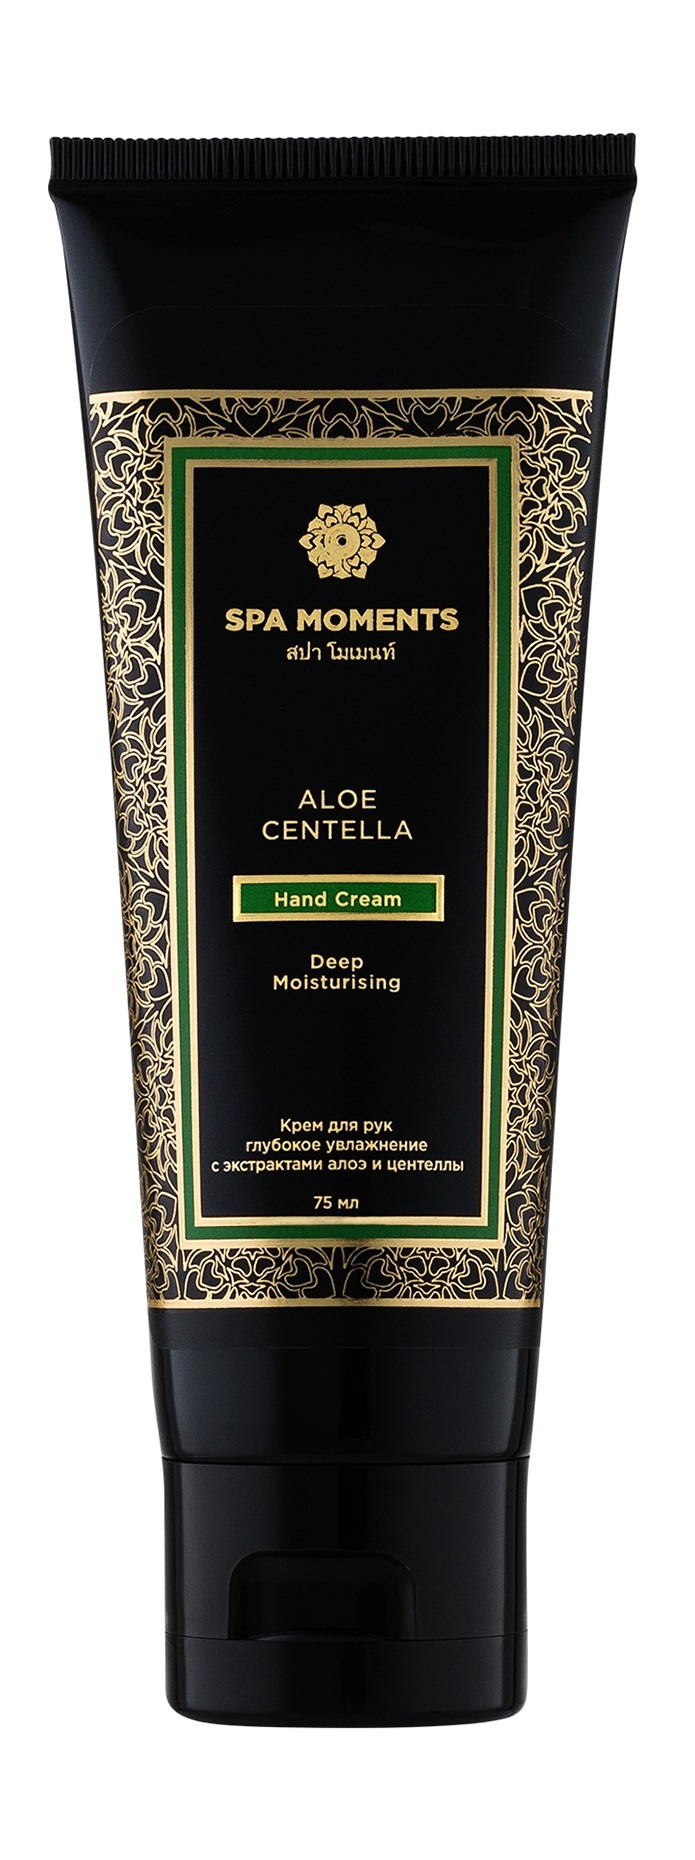 Крем для рук Spa Moments Deep Moisturising Hand Cream with Aloe & Centella